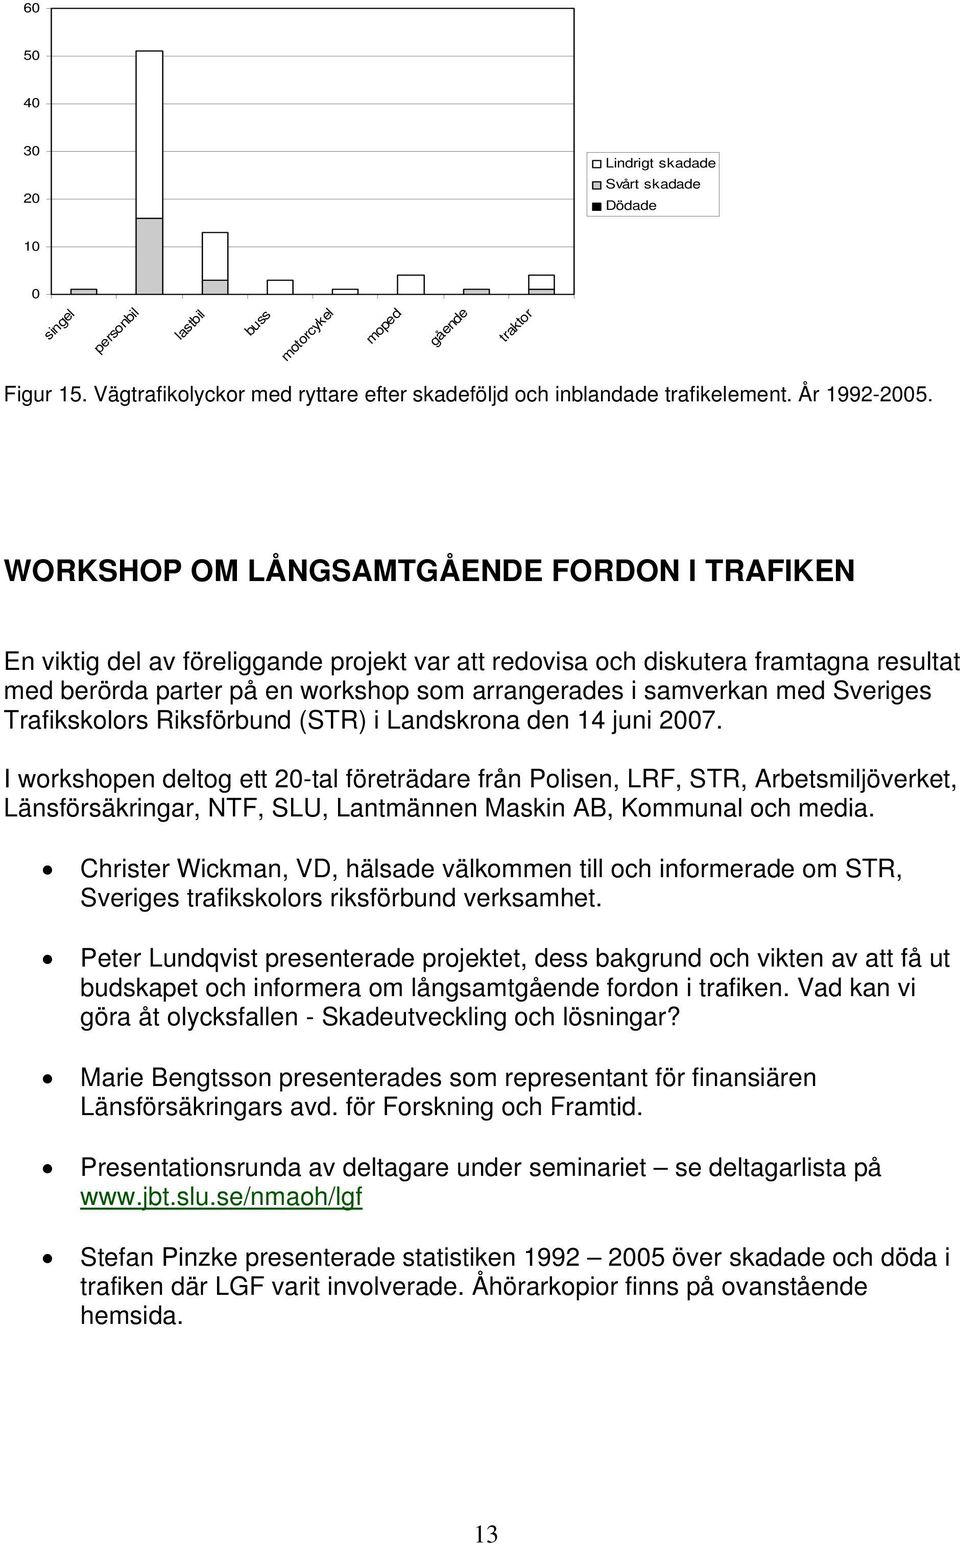 Sveriges Trafikskolors Riksförbund (STR) i Landskrona den 14 juni 27.